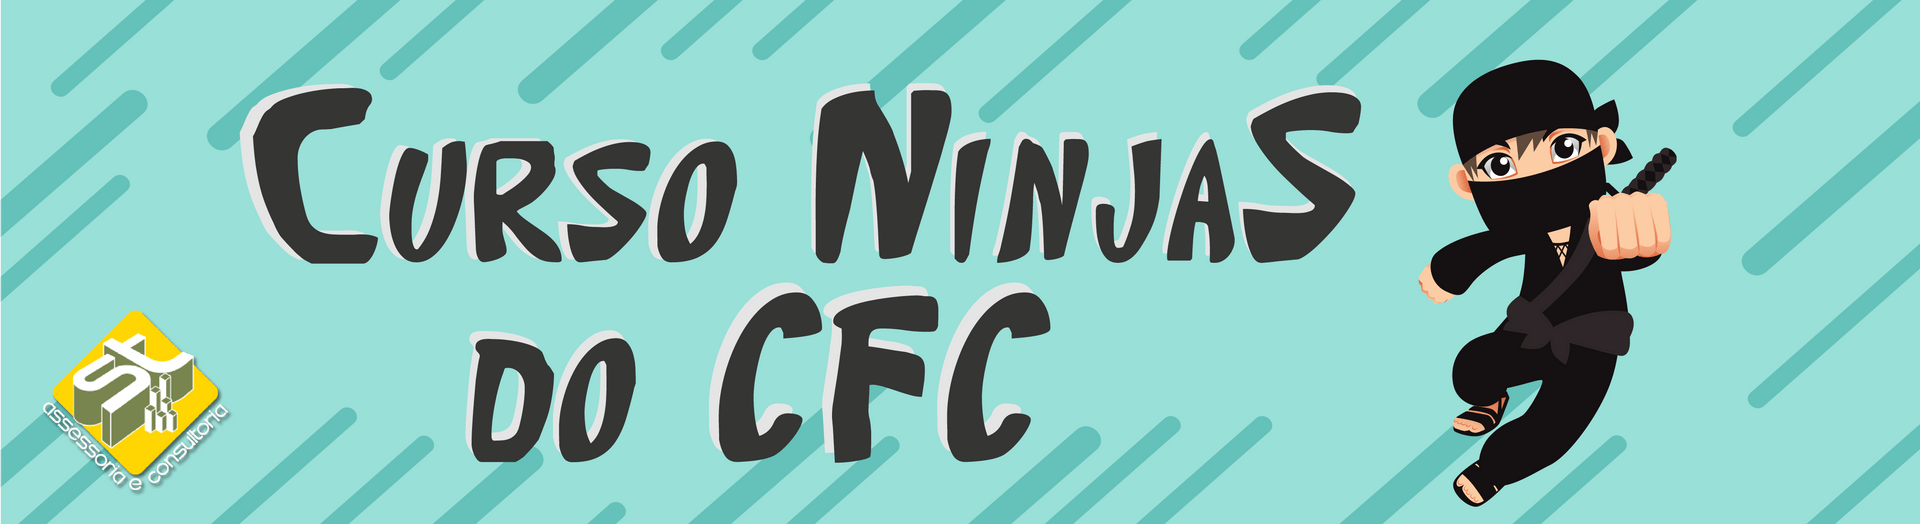 Ninjas do CFC